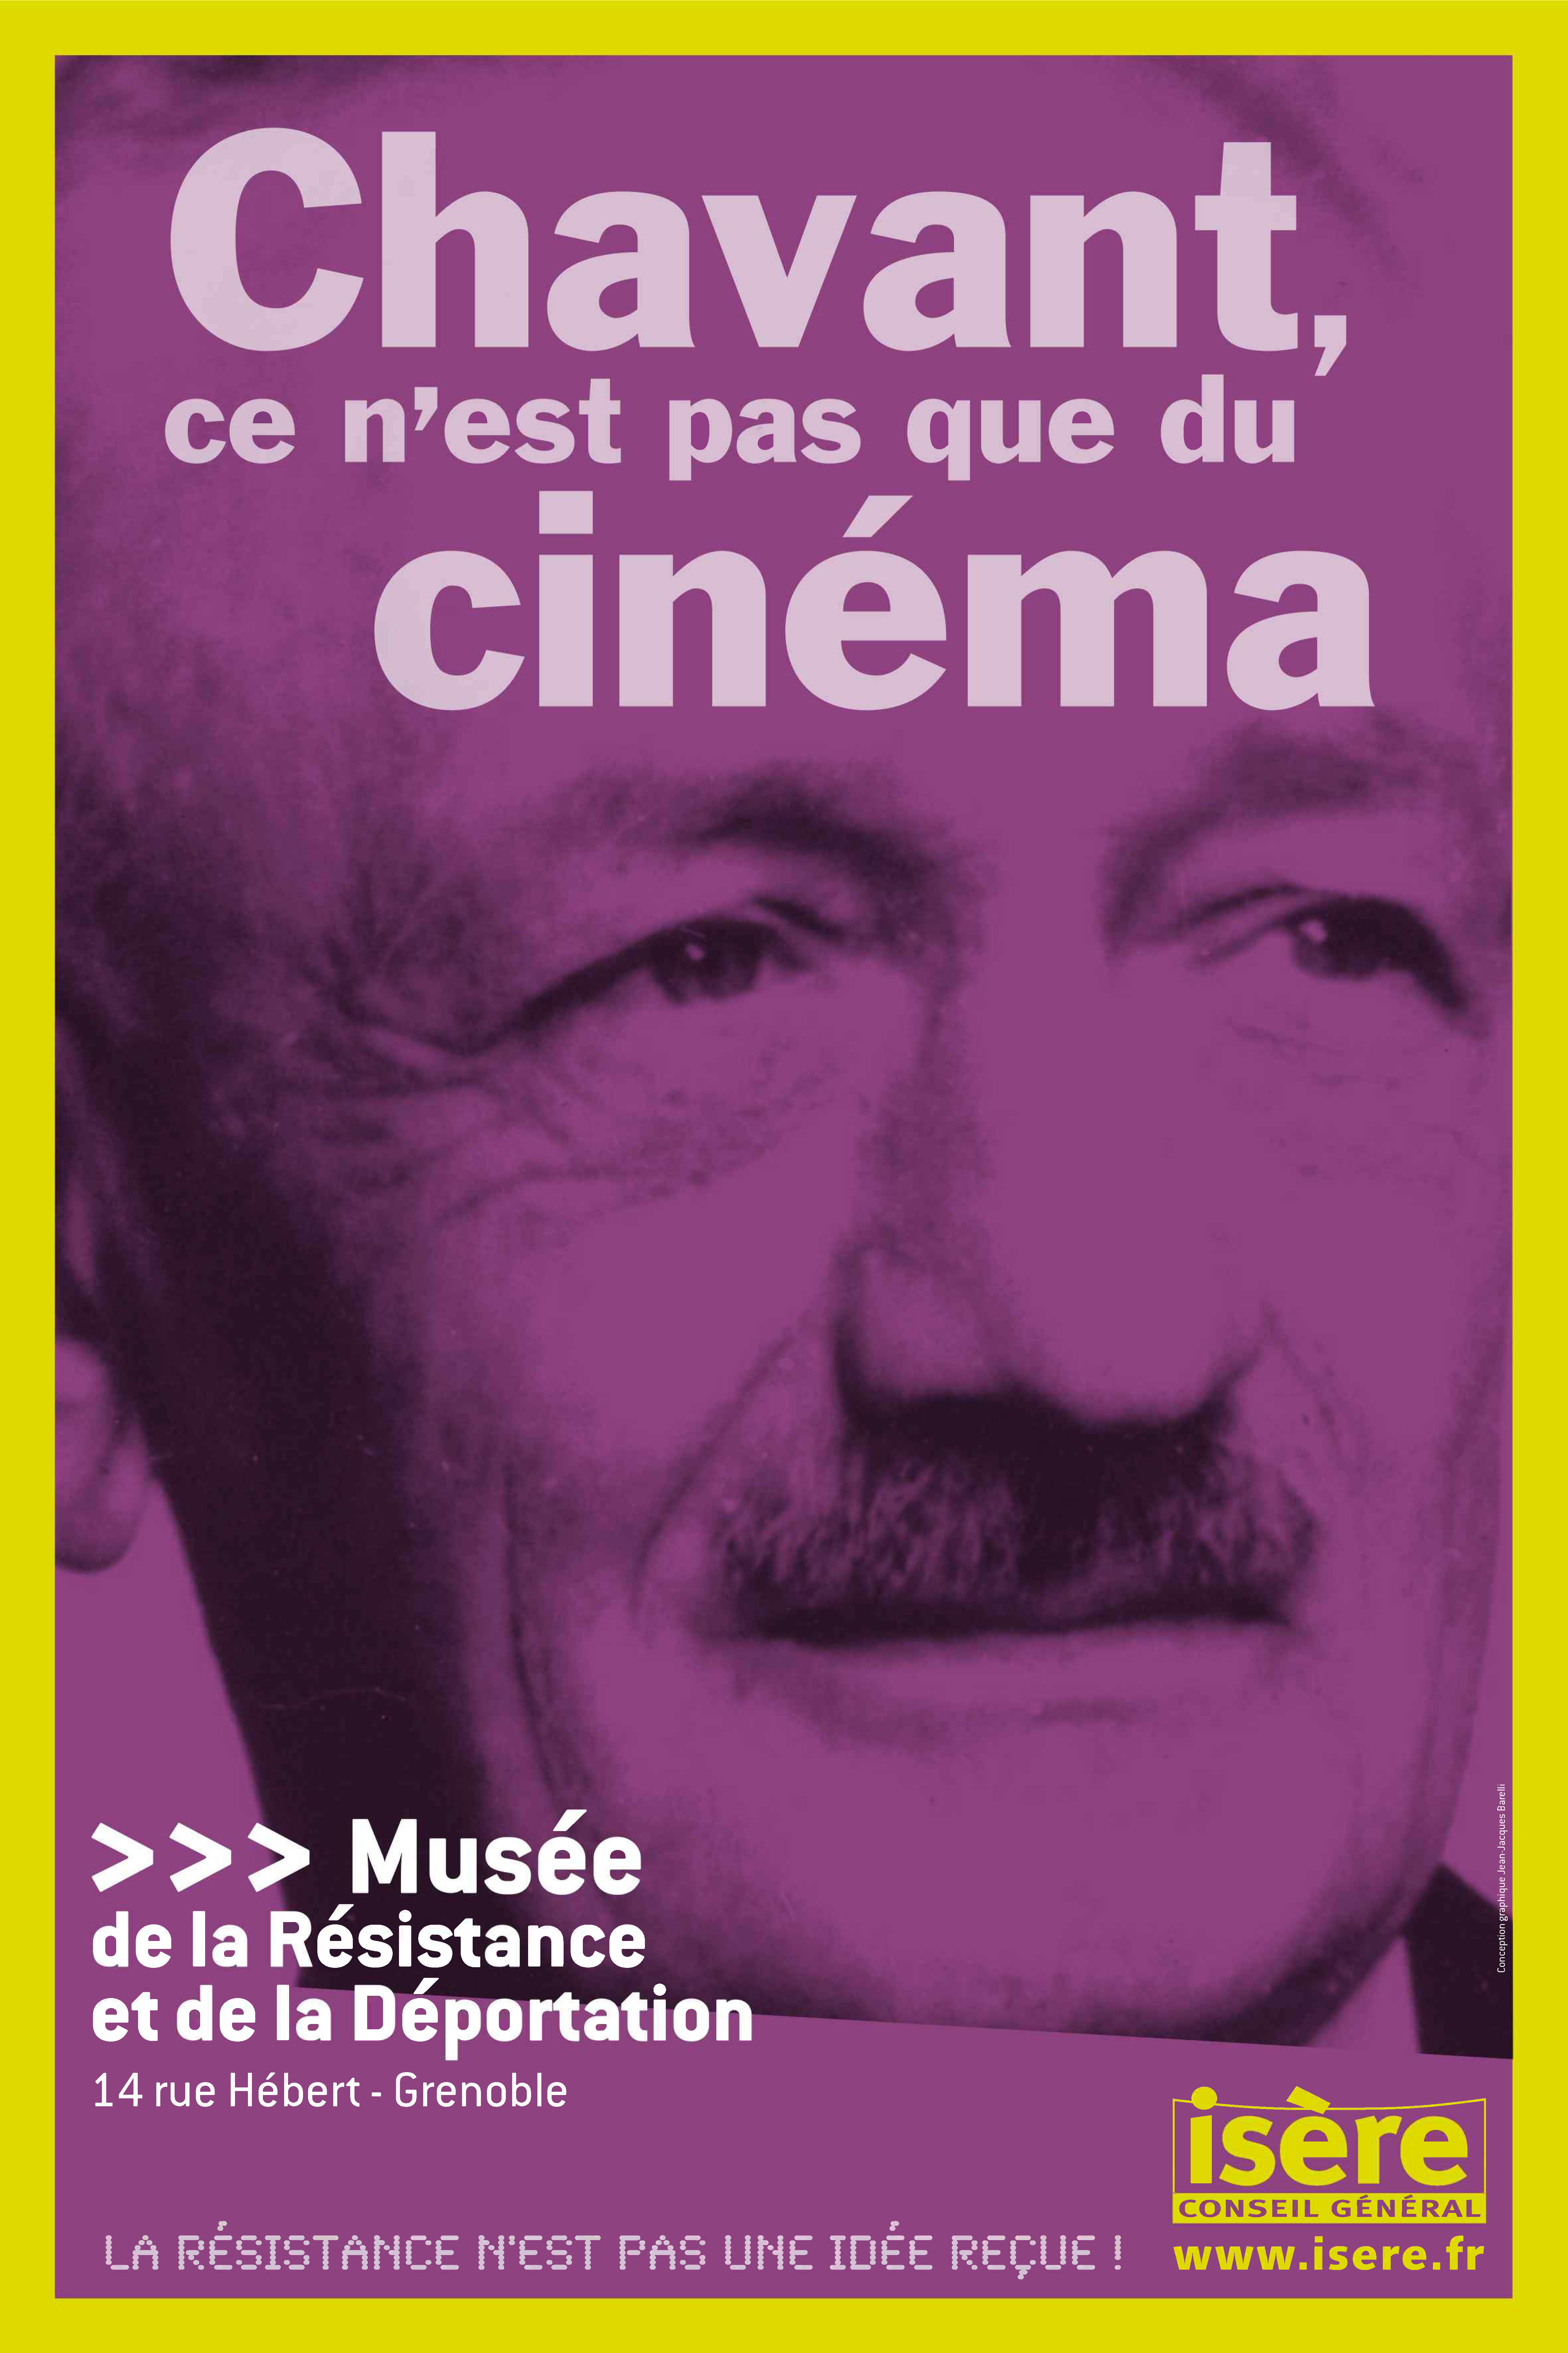 Carte postale "Eugène Chavant"